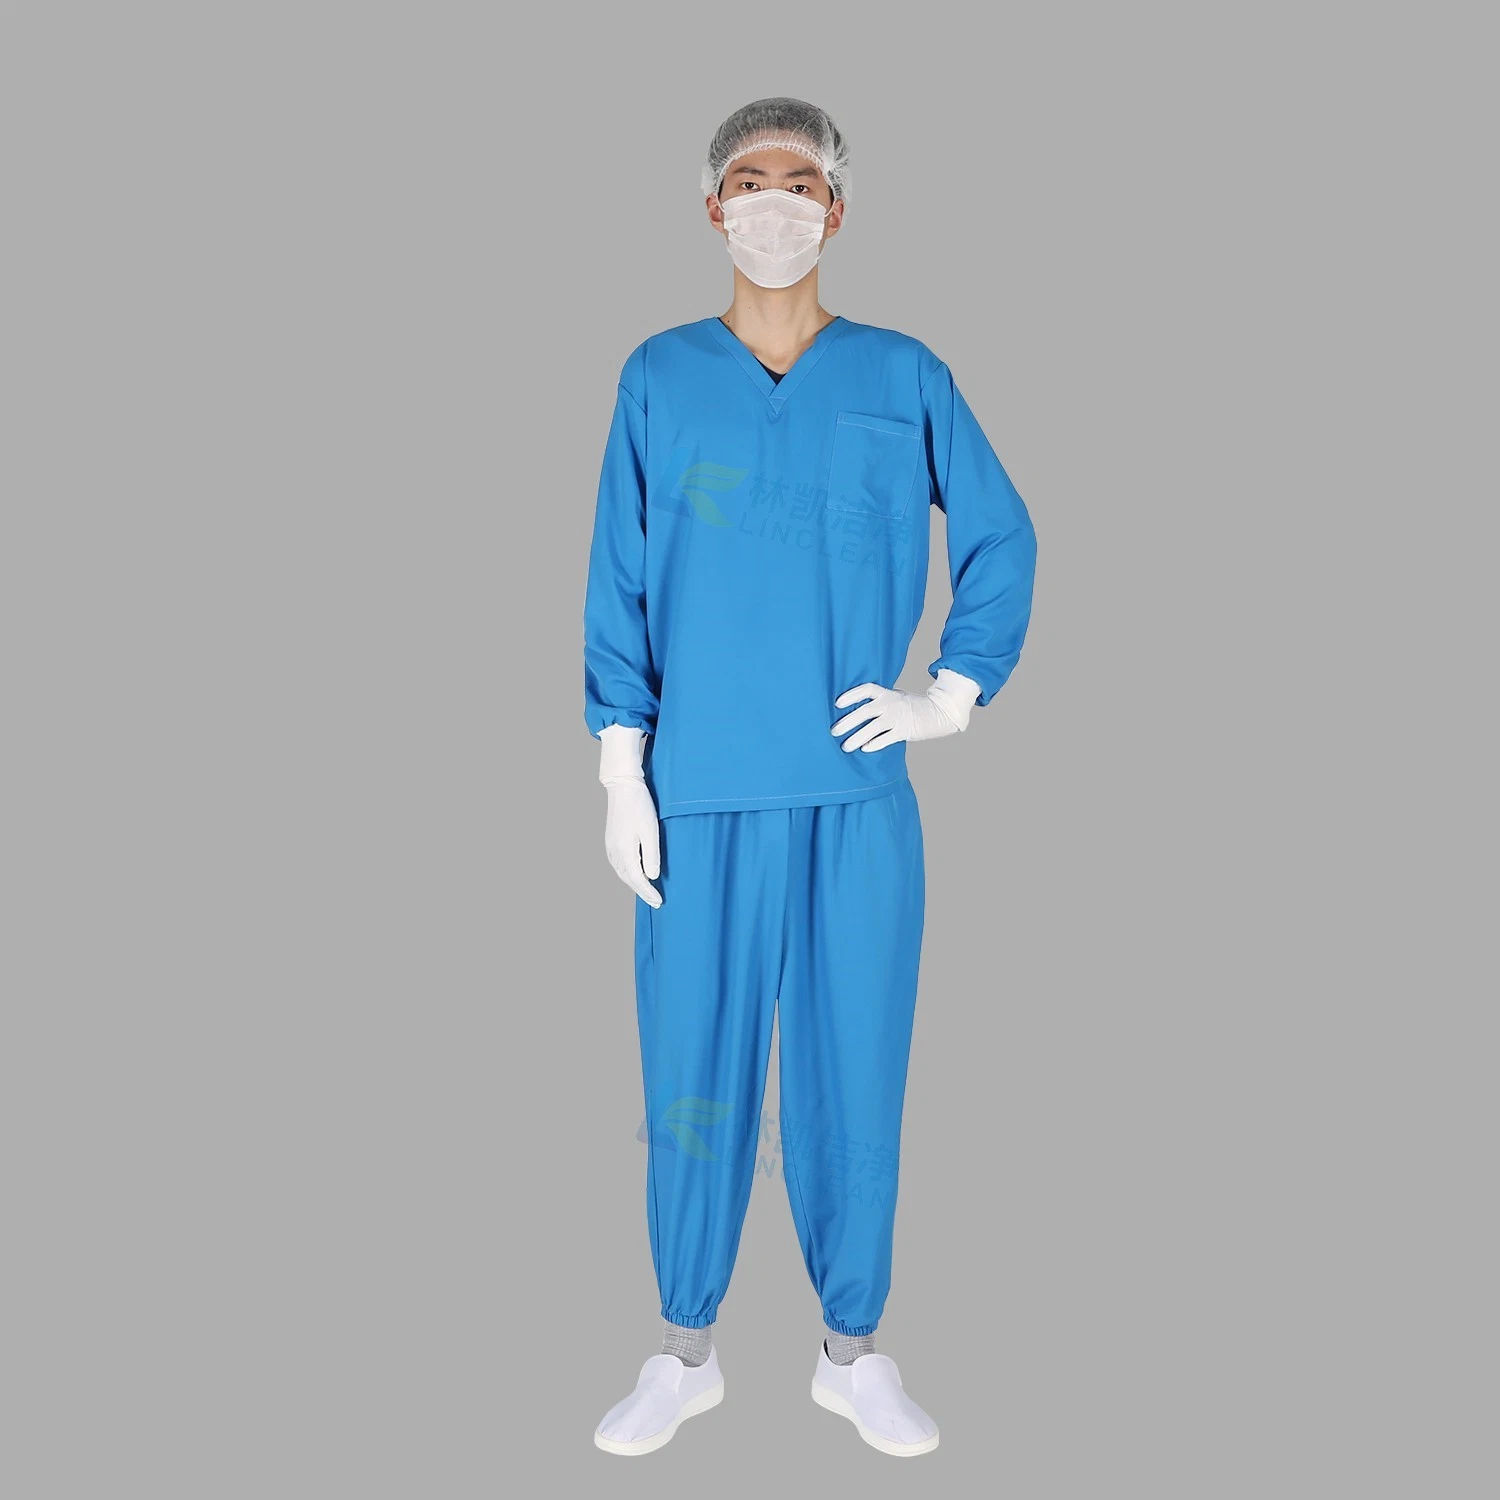 Unisex Conductive Antistatic Working Clothing Safety Shirts ESD Workwear